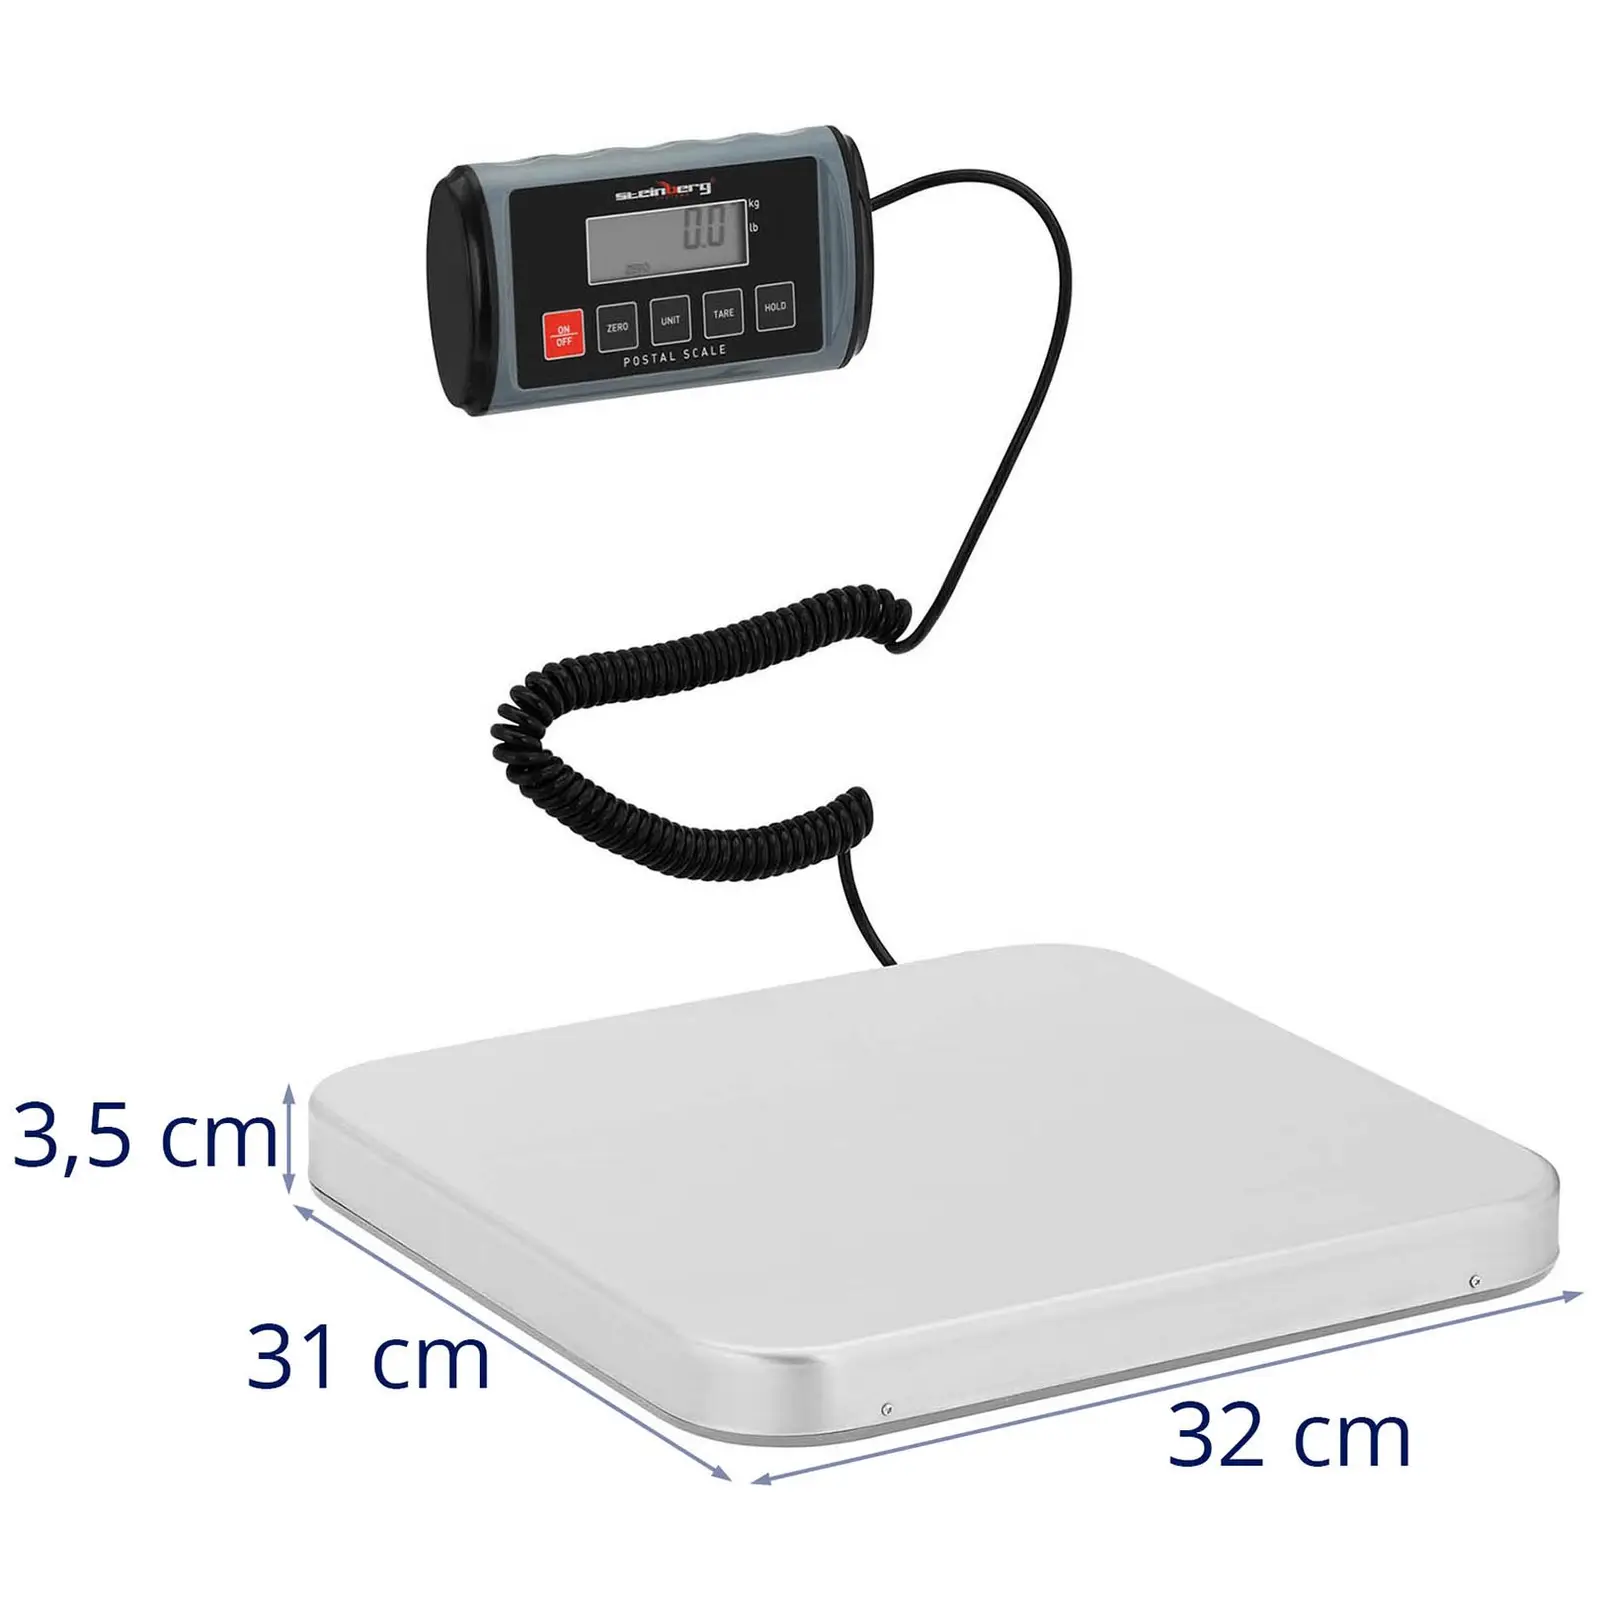 Báscula para paquetería - 200 kg / 0,1 kg - 31 x 32 cm - LCD externa